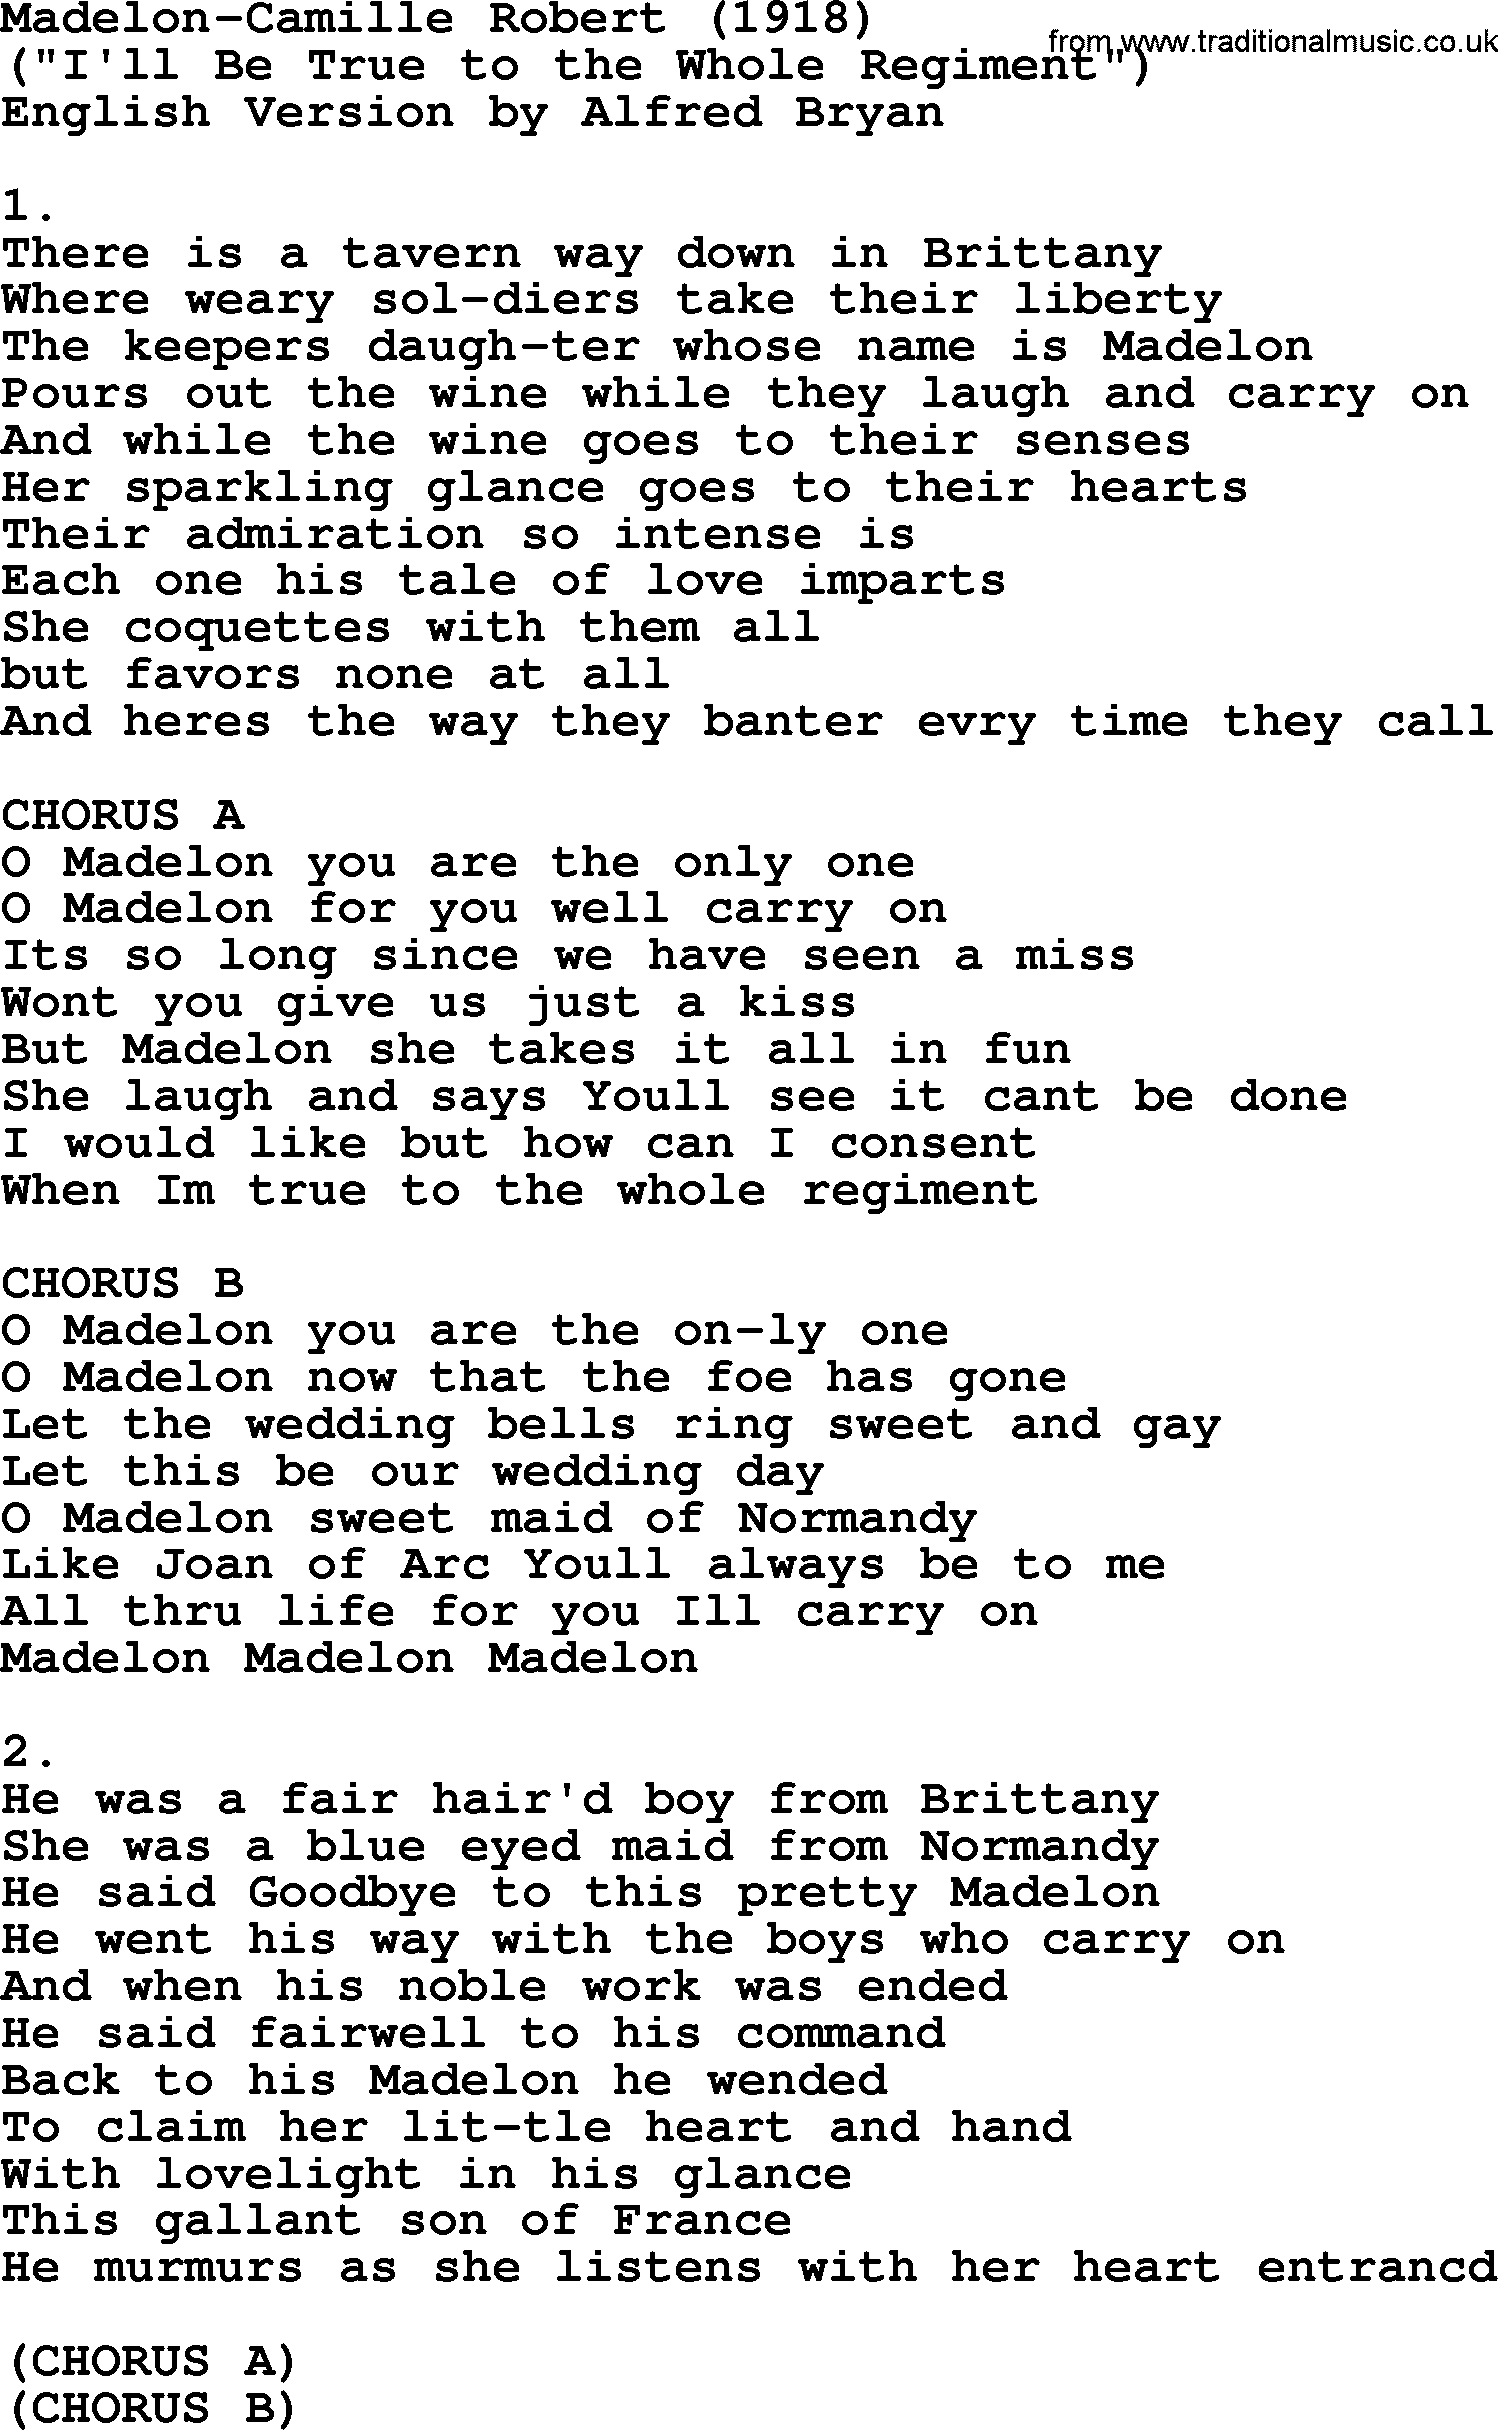 World War(WW1) One Song: Madelon-Camille Robert 1918, lyrics and PDF